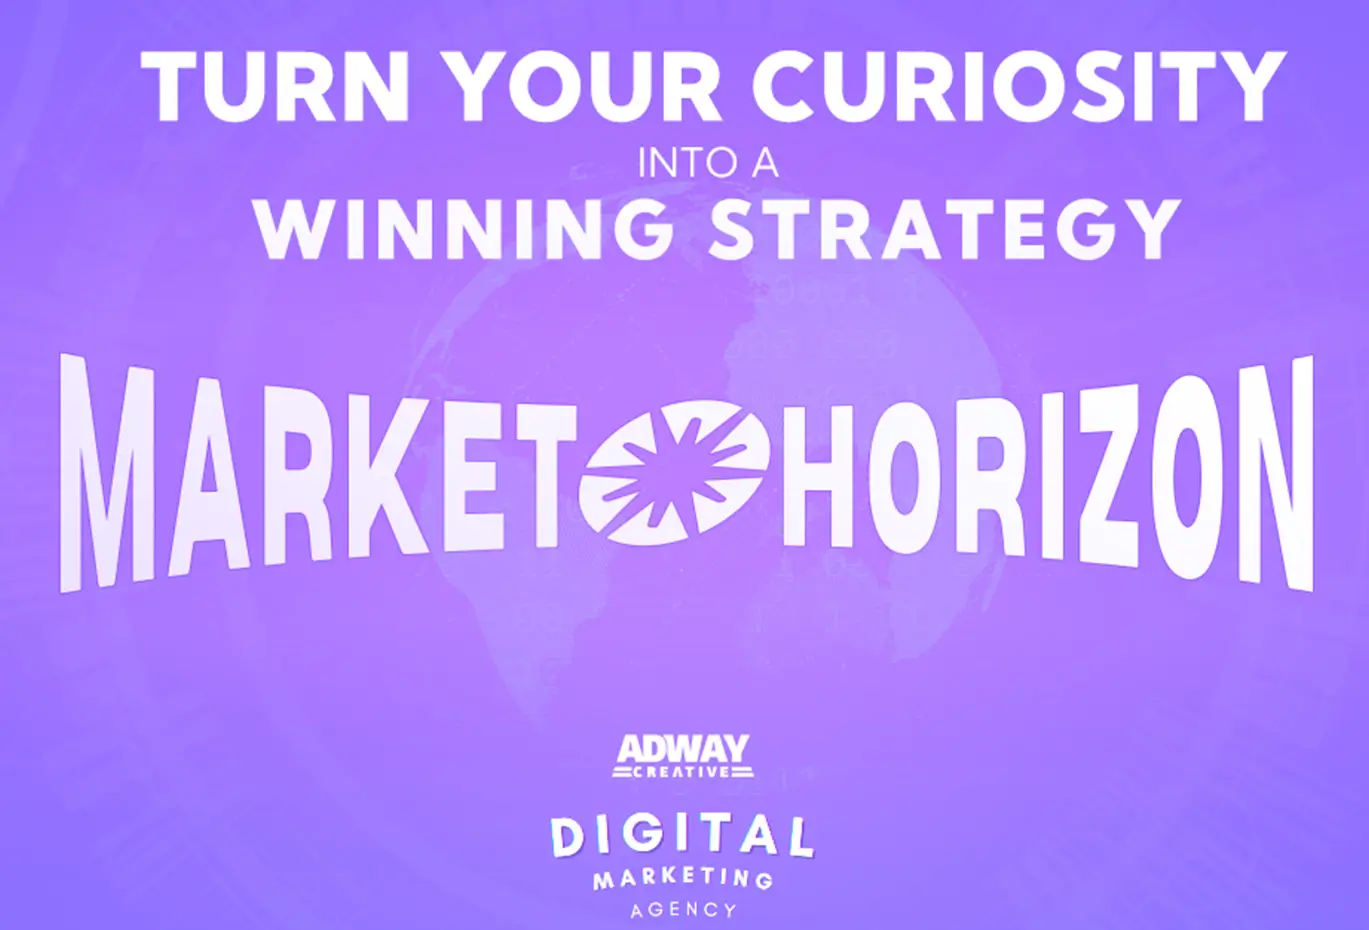 AdwayCreative's MarketHorizon service facilitates data driven sales approaches